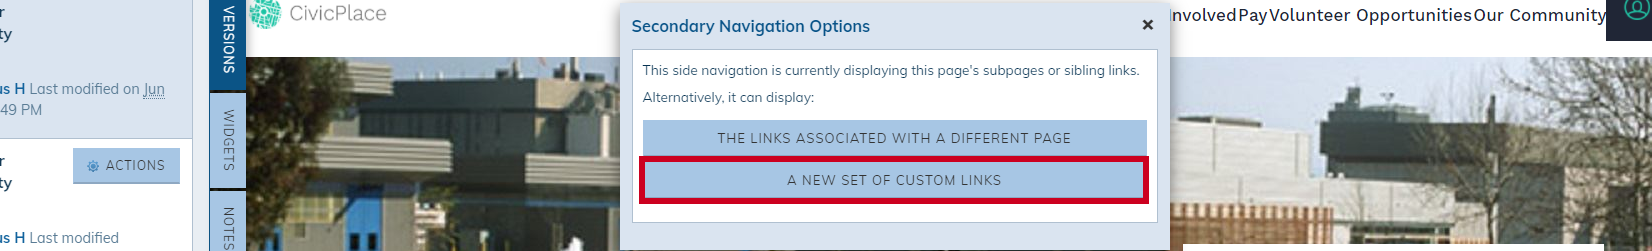 a_new_set_of_custom_links.png